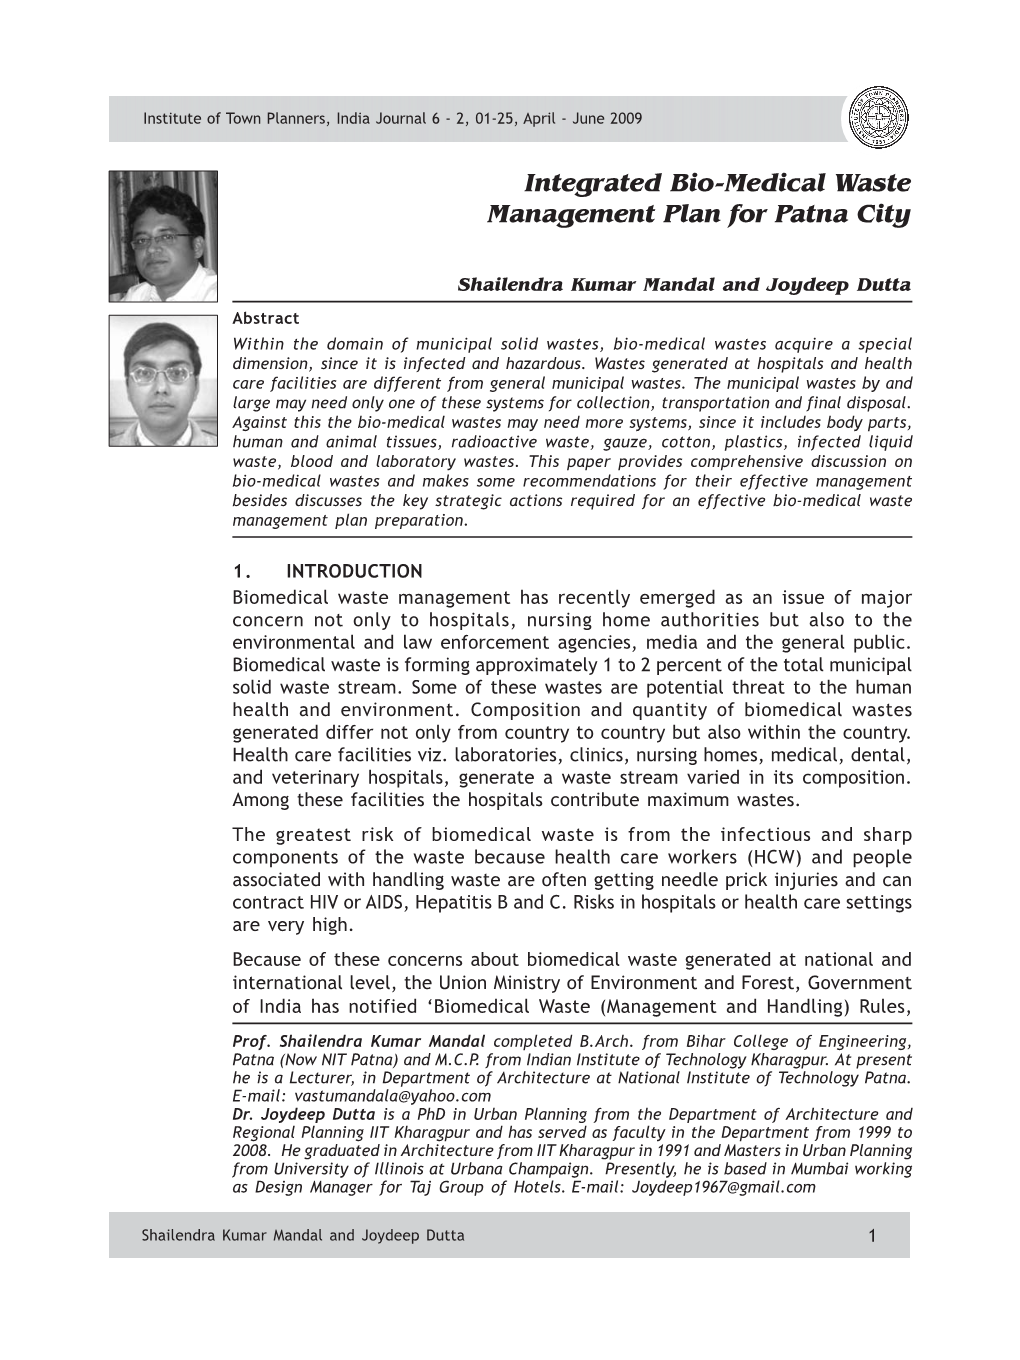 Integrated Bio-Medical Waste Management Plan for Patna City